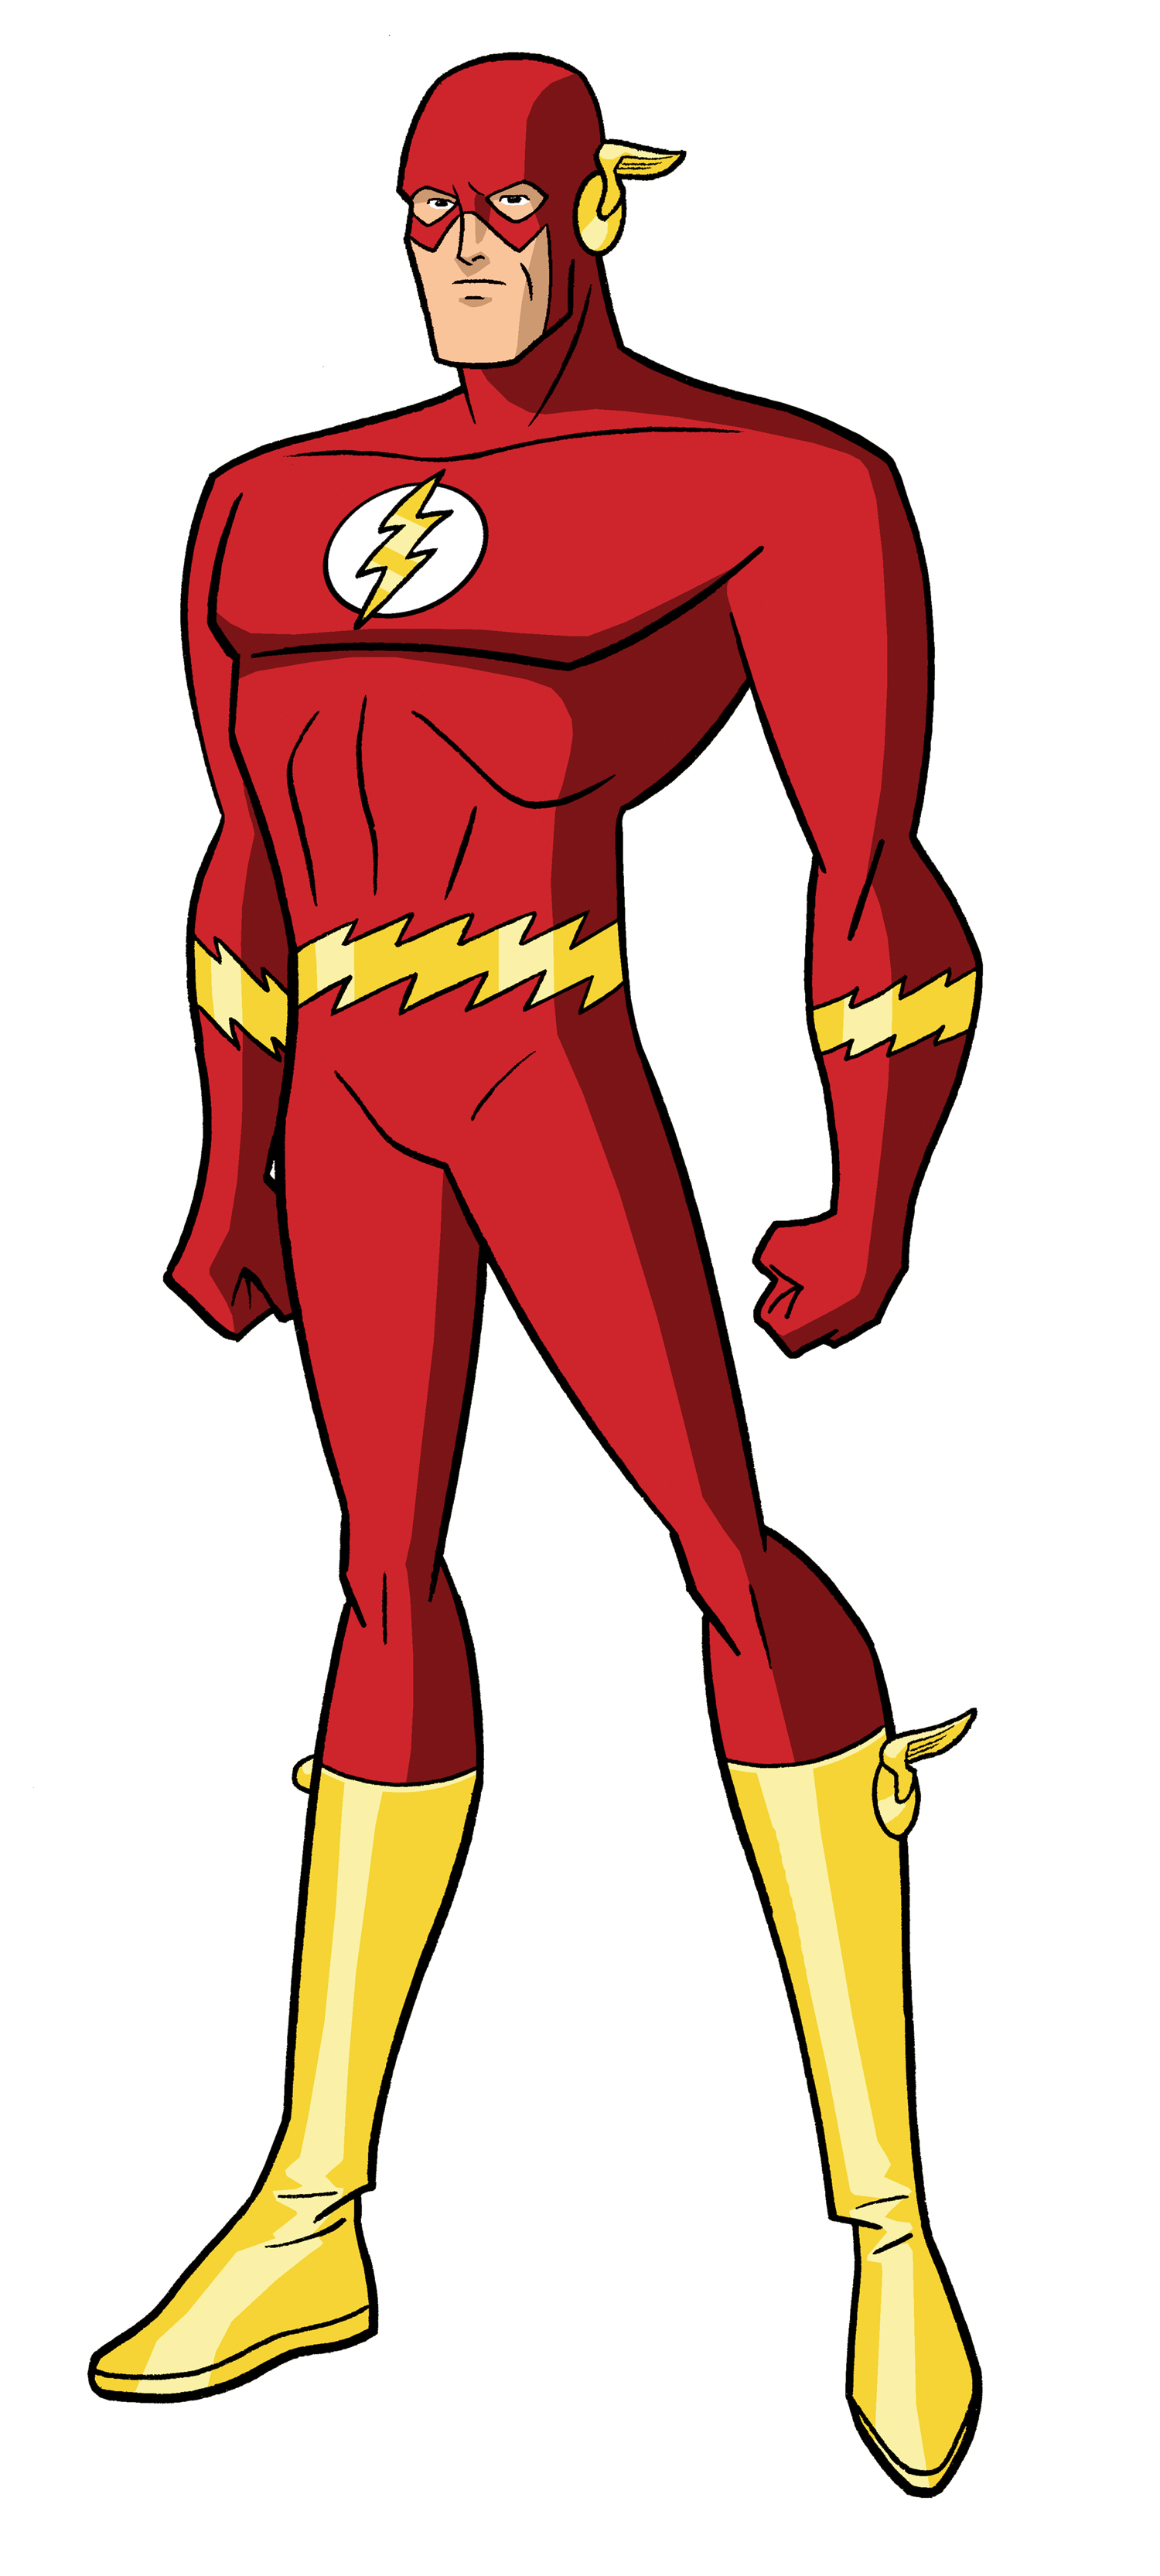 Justice League DCAU - The Flash (Barry Allen) by timlevins